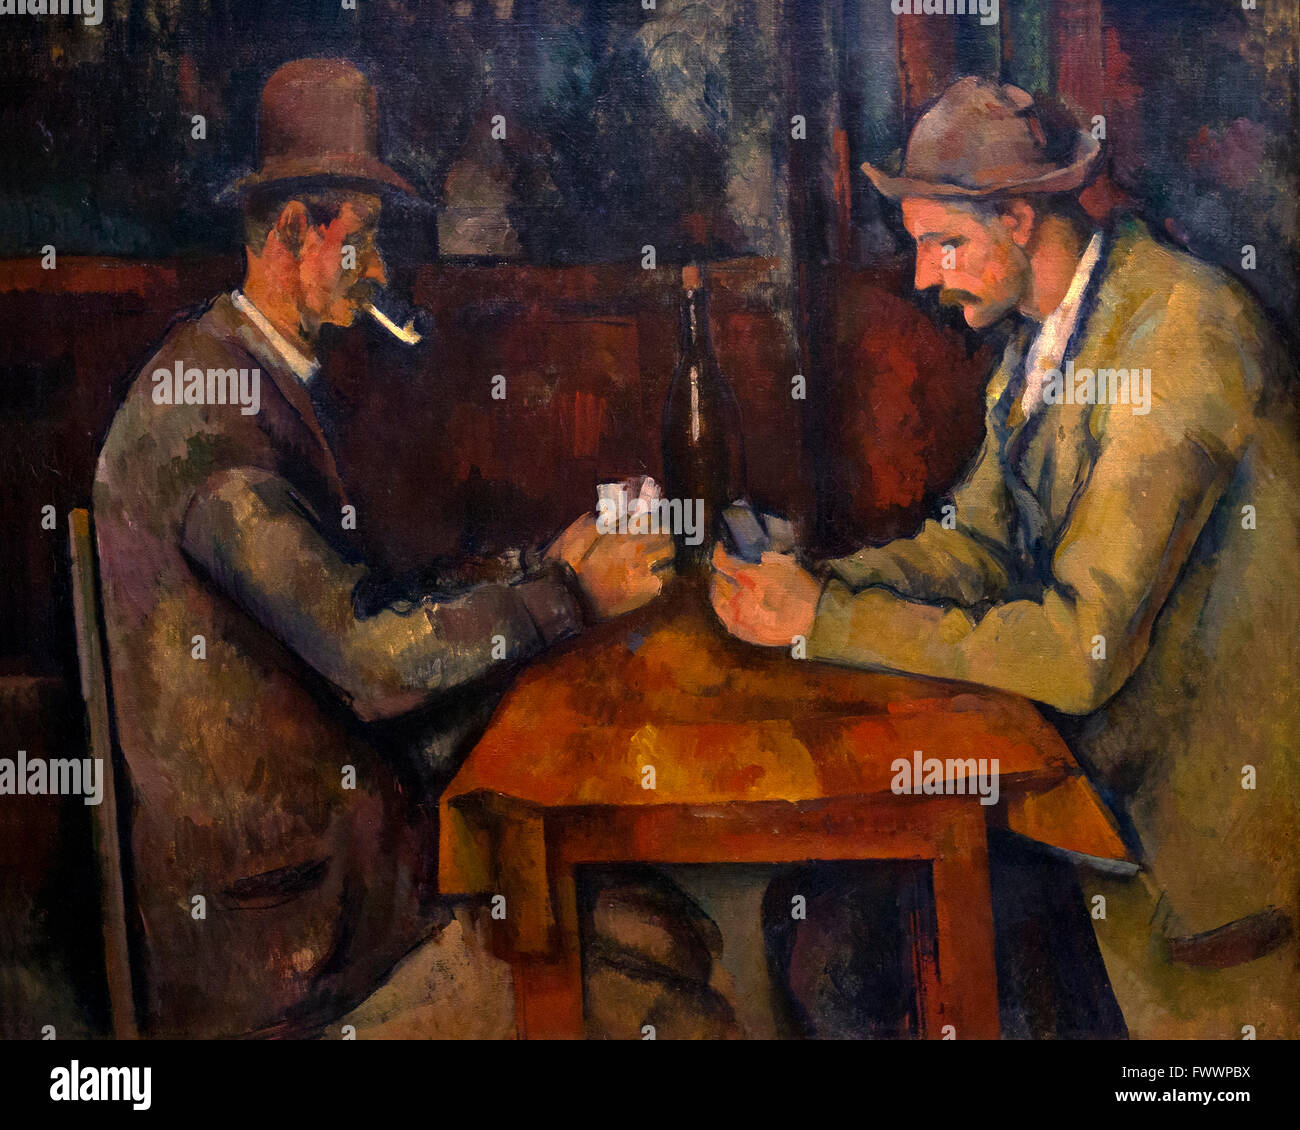 The Card Players, Les Joueurs de Cartes, by Paul Cezanne, 1890-1895, Musee D'Orsay Museum & Art Gallery Paris France Europe Stock Photo